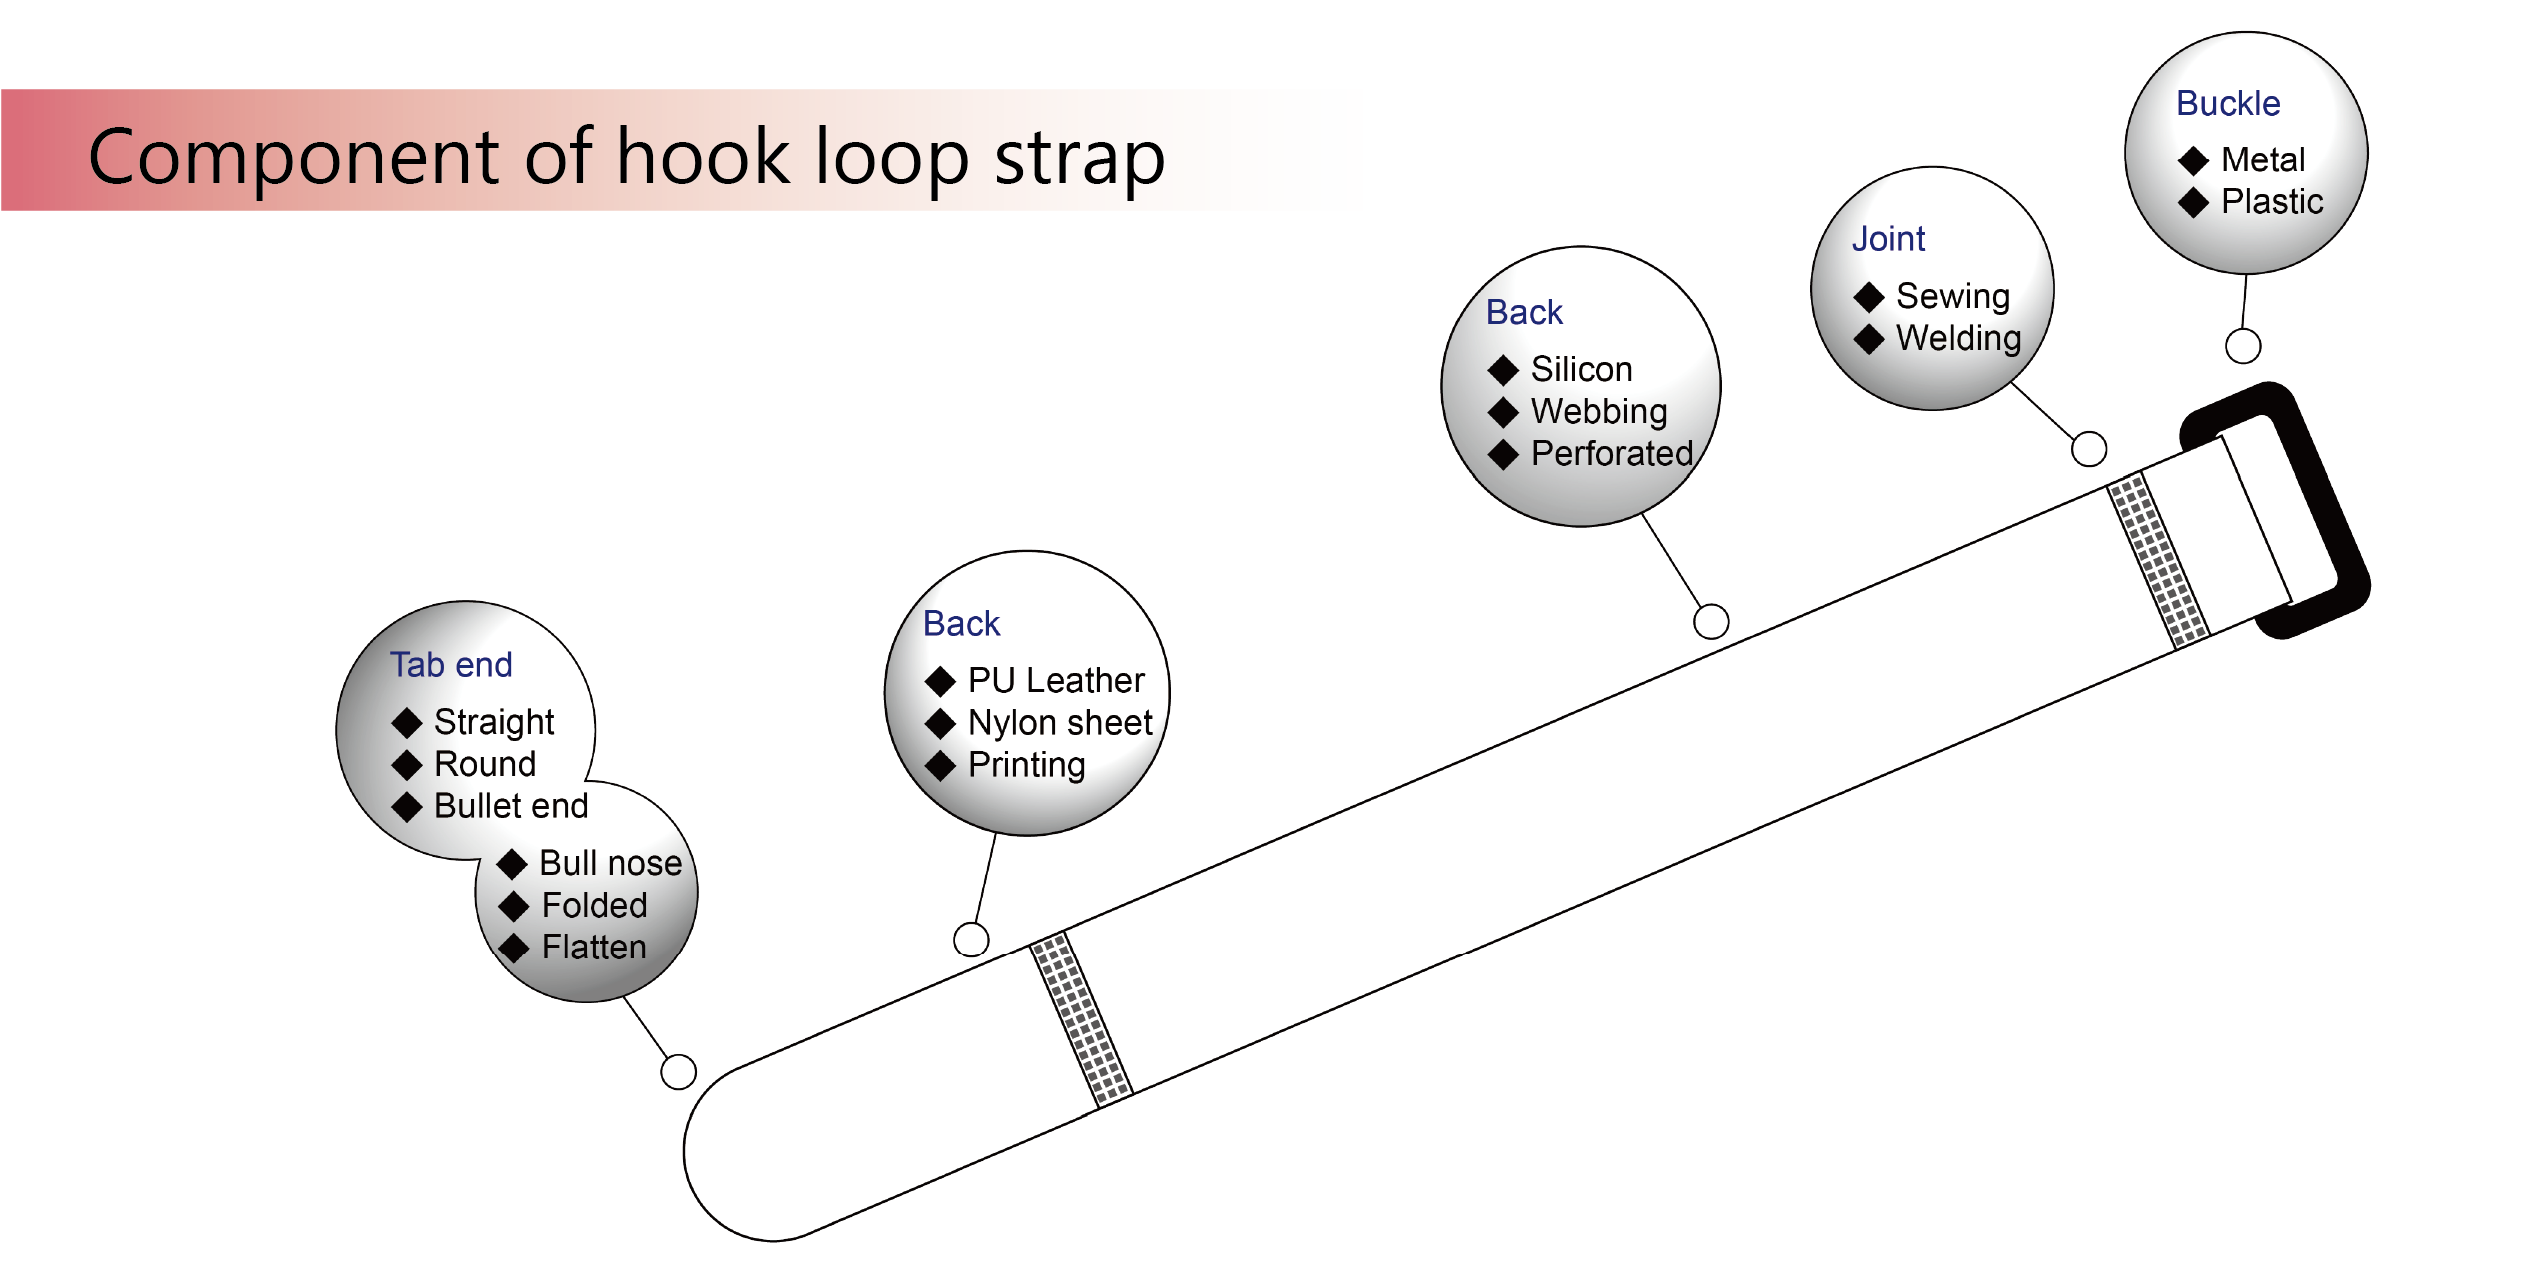 Component of hook loop fastening strap